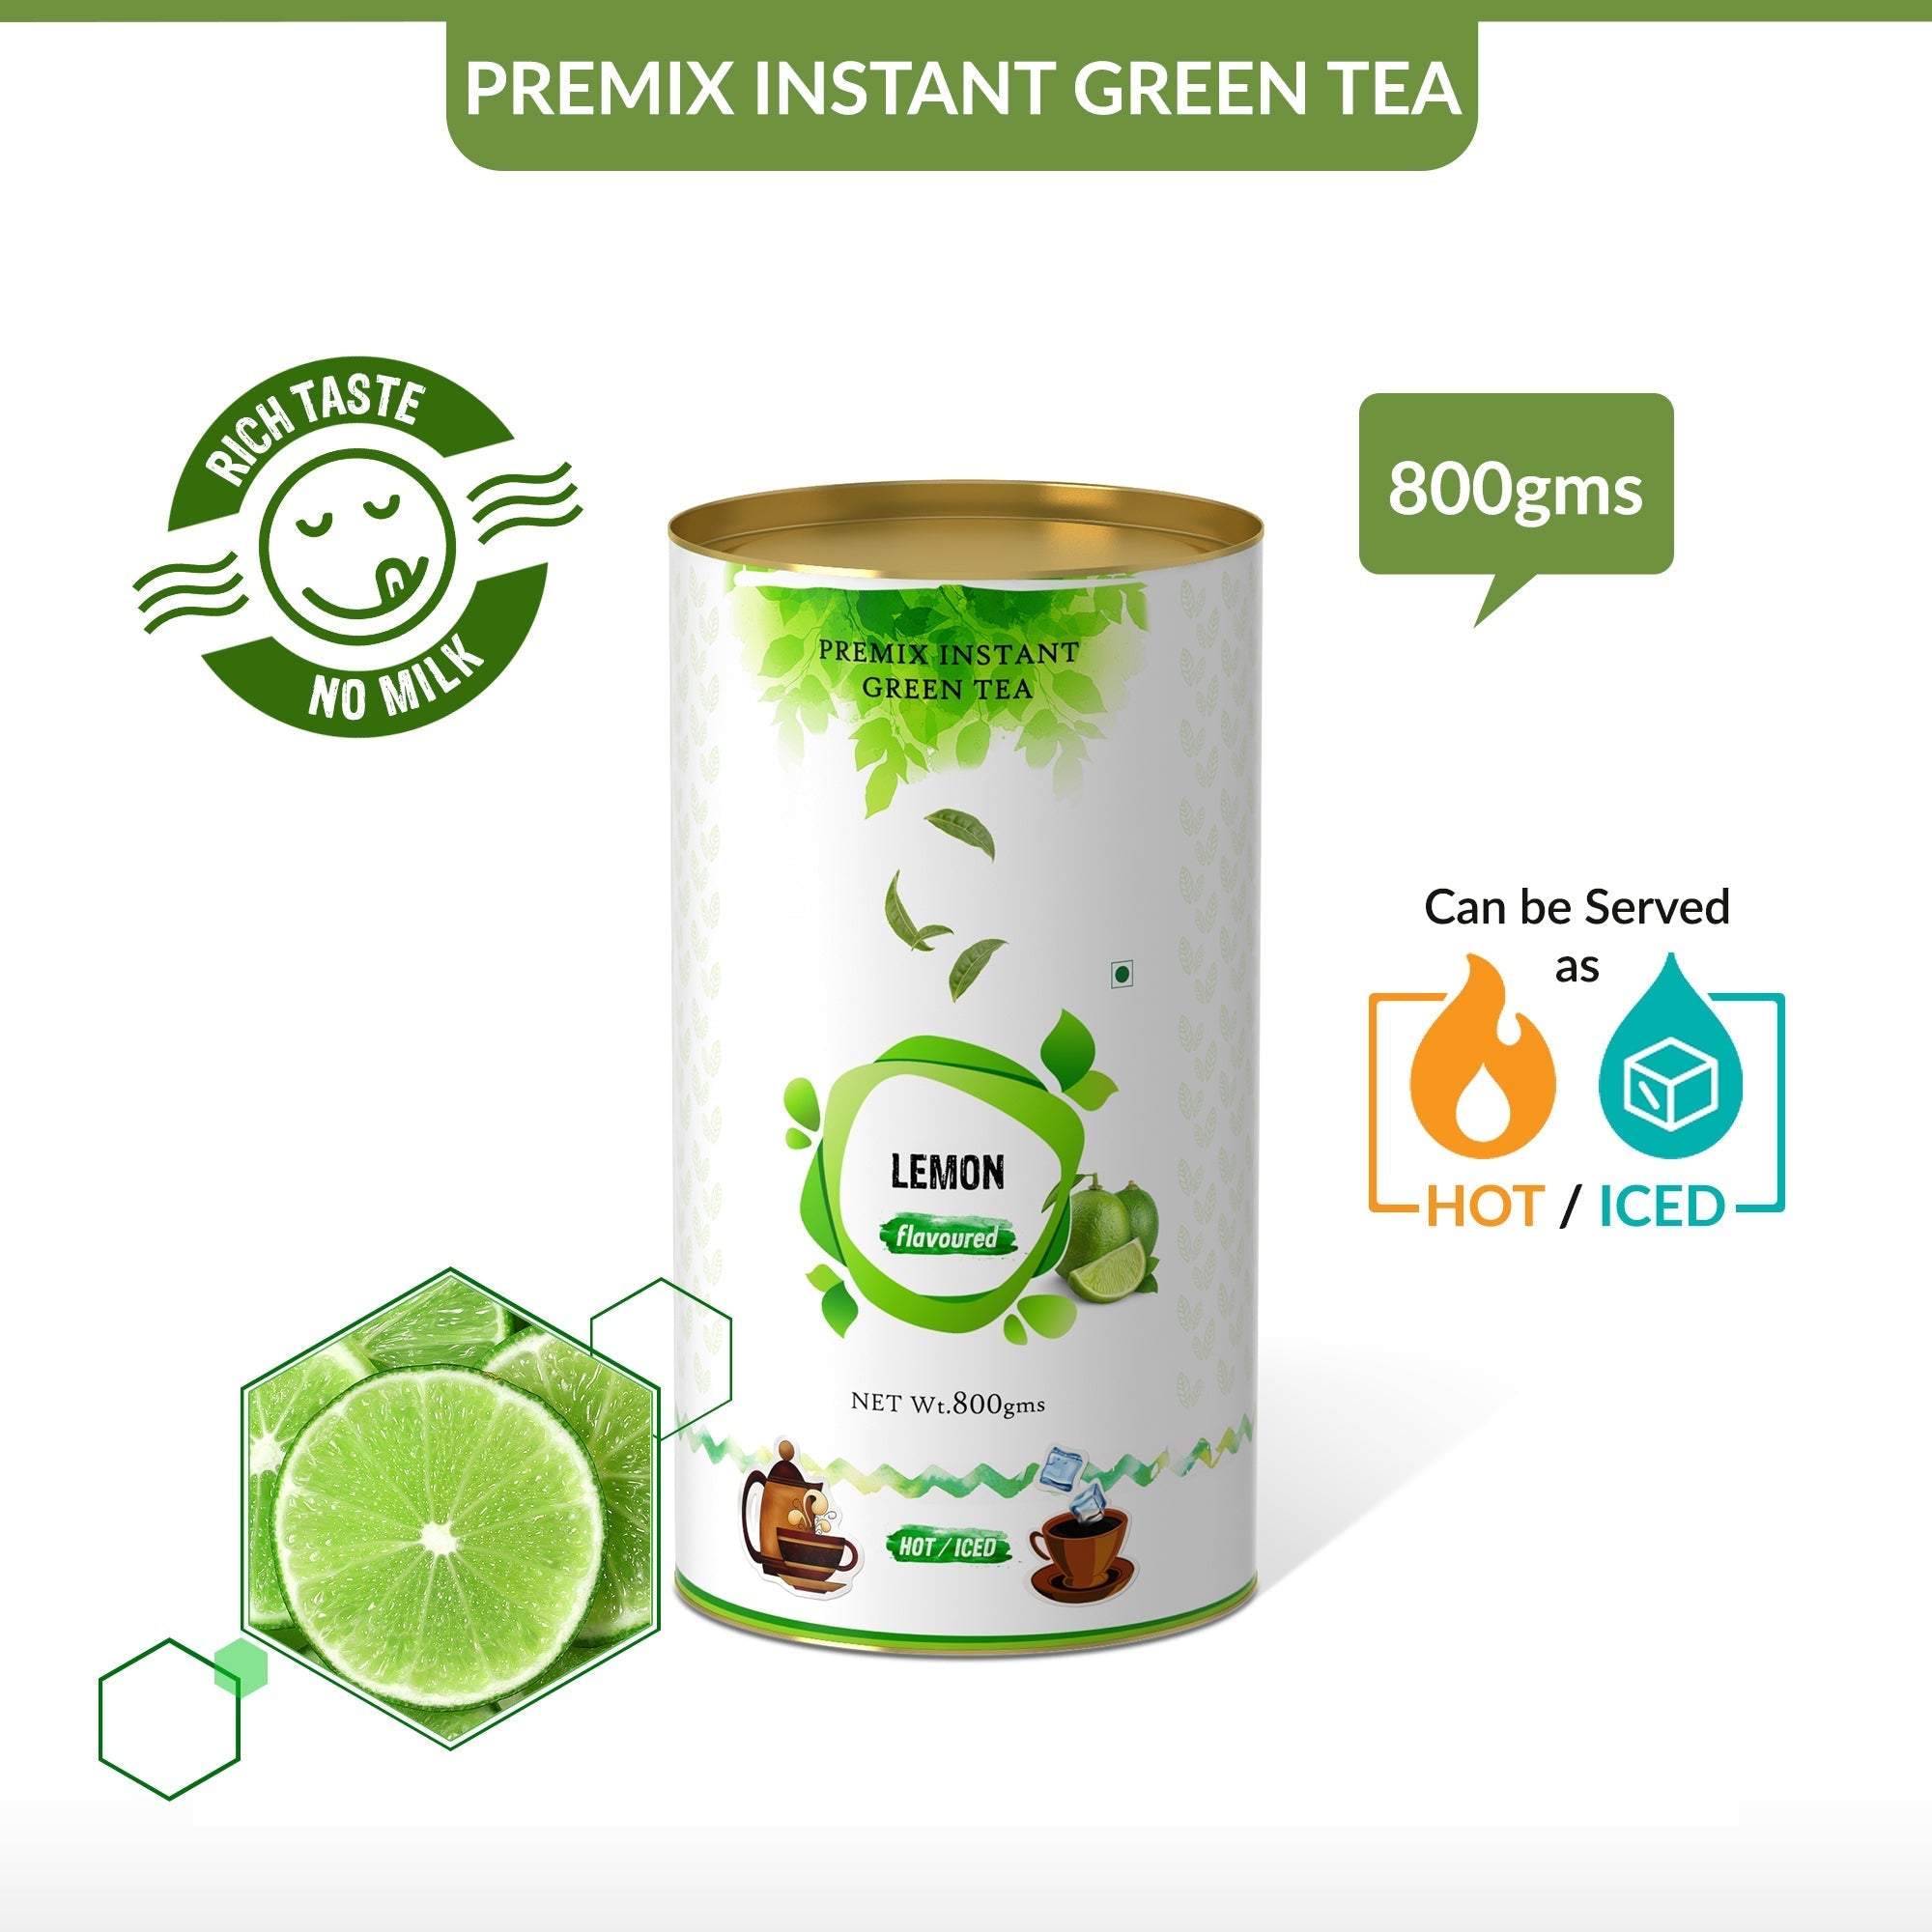 Lemon Flavored Instant Green Tea - 400 gms